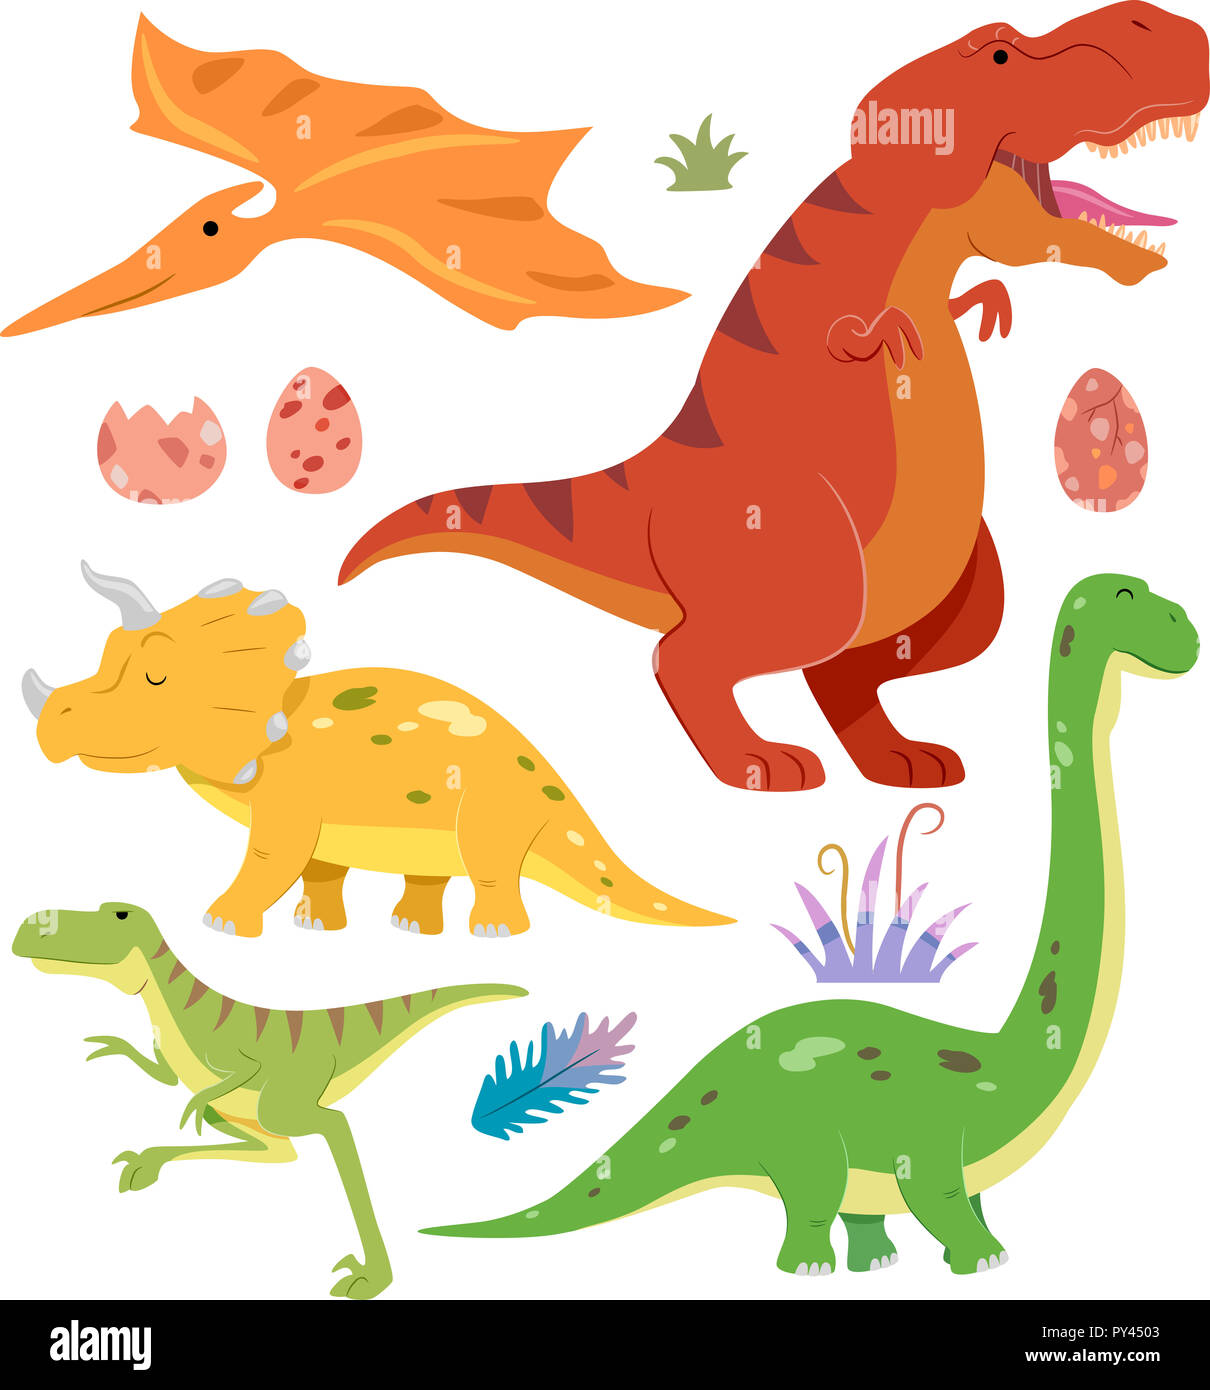 Illustration of Different Dinosaurs from Tyrannosaurus Rex ...